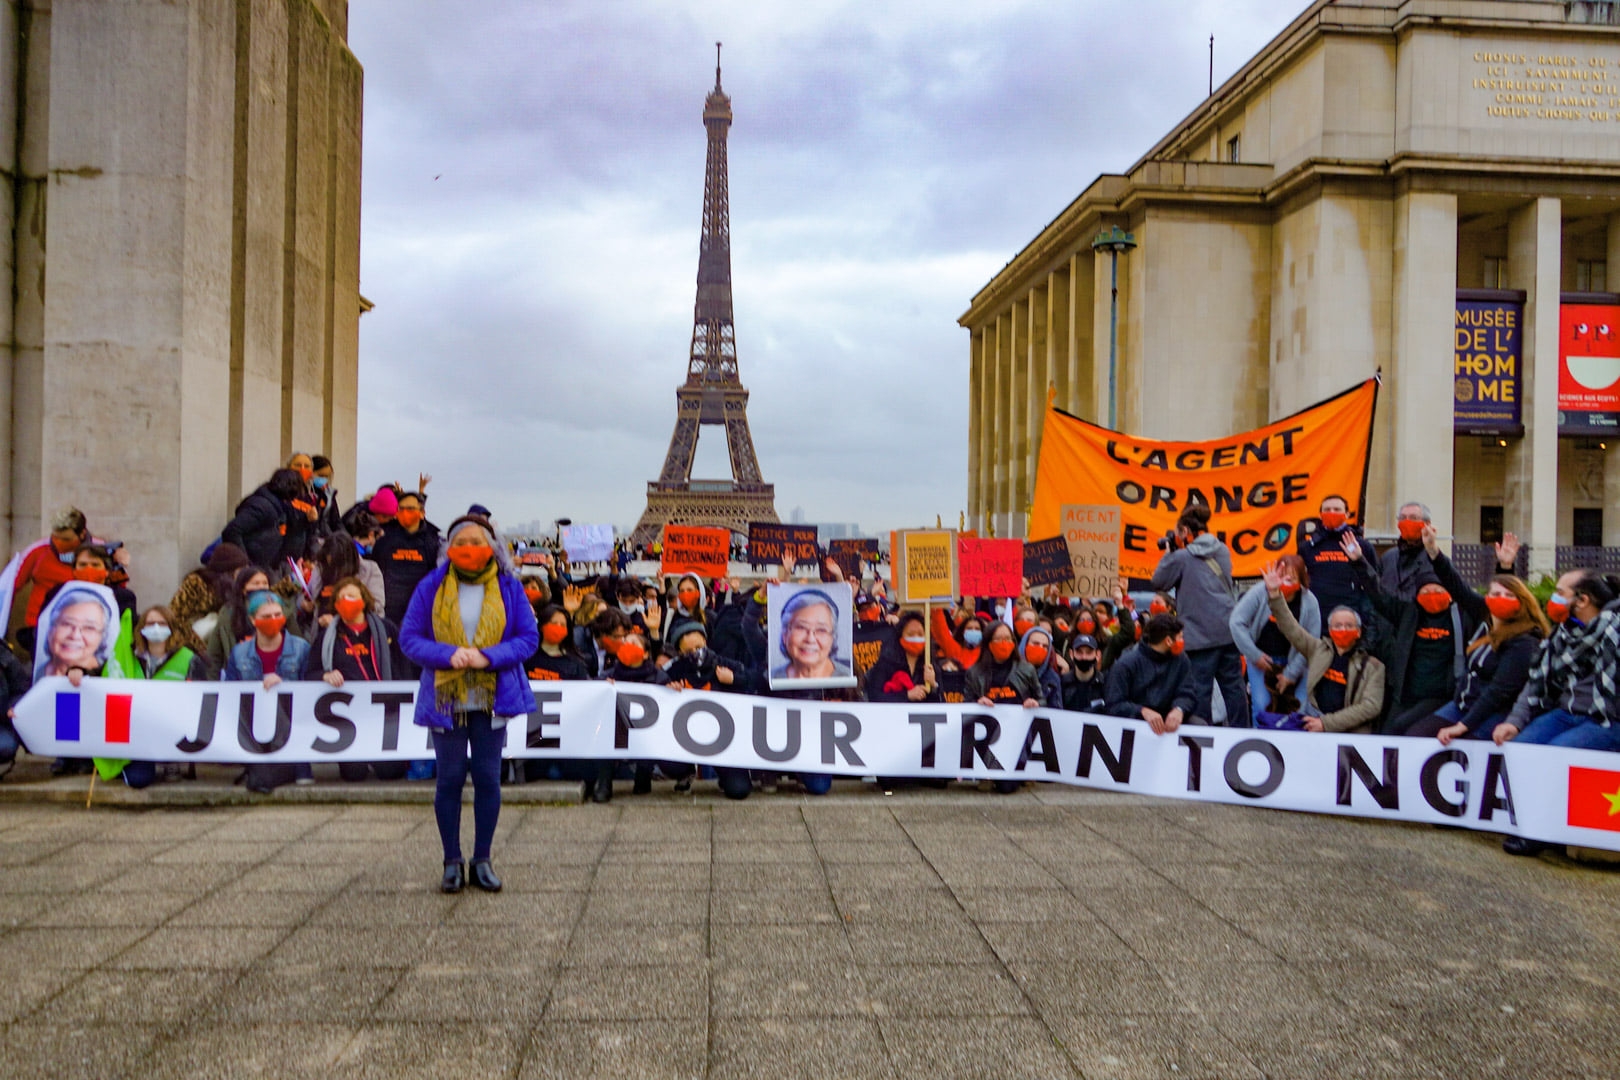 French Vietnamese woman's Agent Orange lawsuit wins activists' support